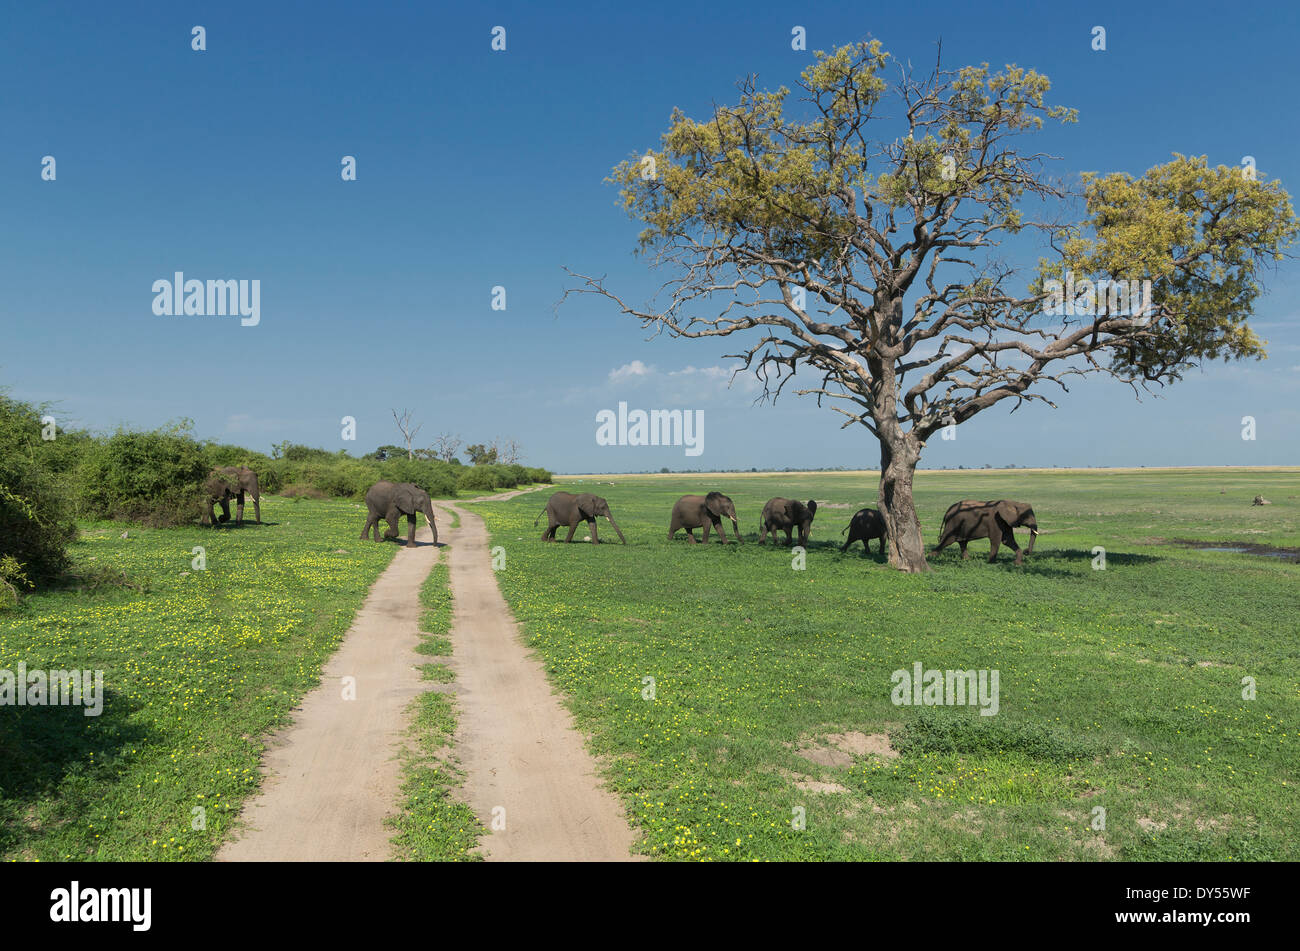 African elephants (Loxodonta africana) walking in line Stock Photo